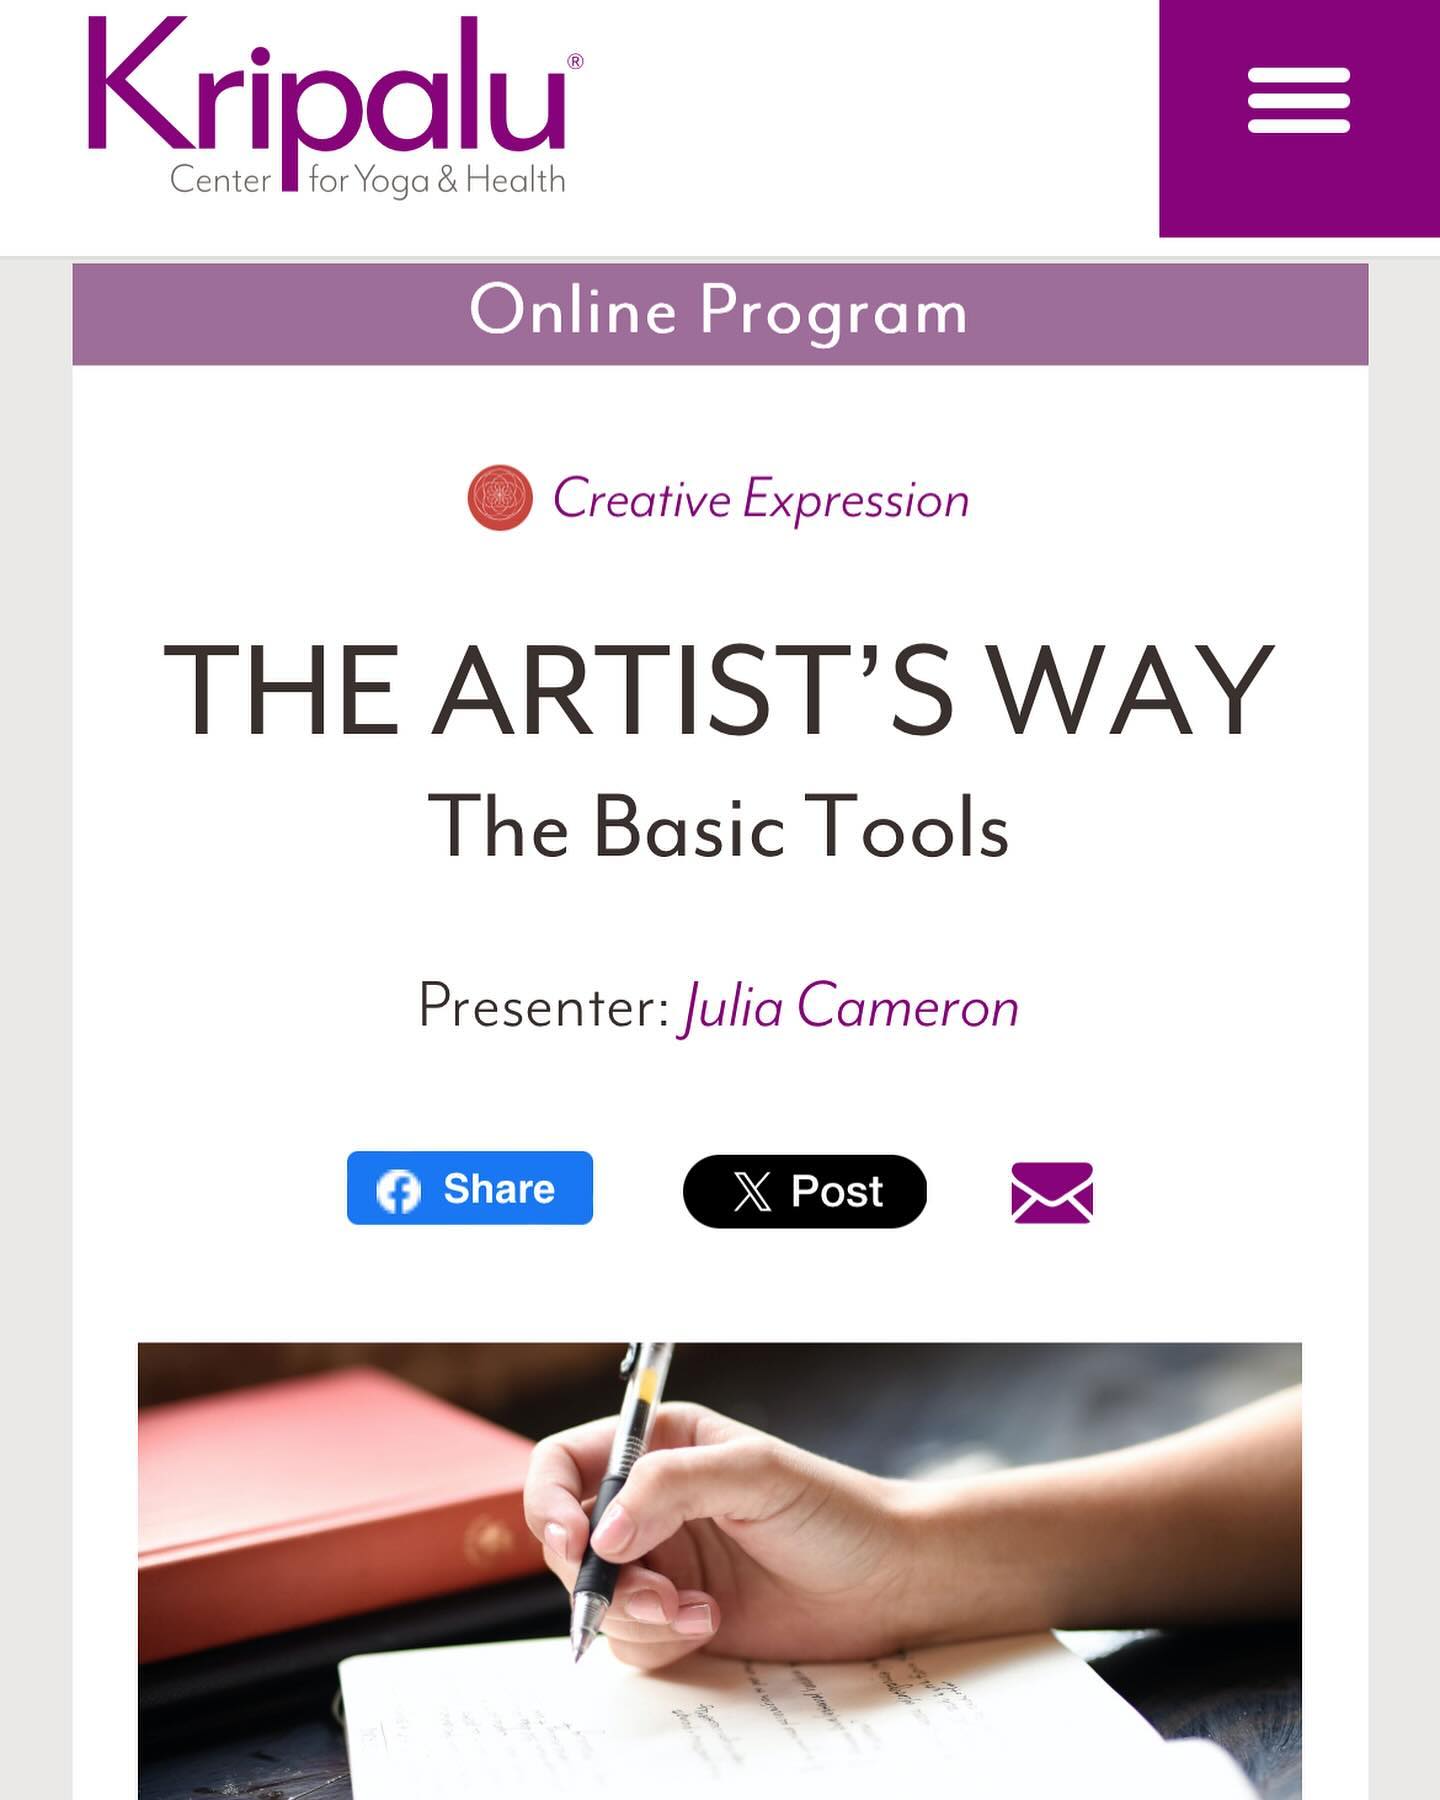 Join me live online July 18! 🩷 @kripalucenter https://kripalu.org/presenters-programs/artist-s-way-basic-tools